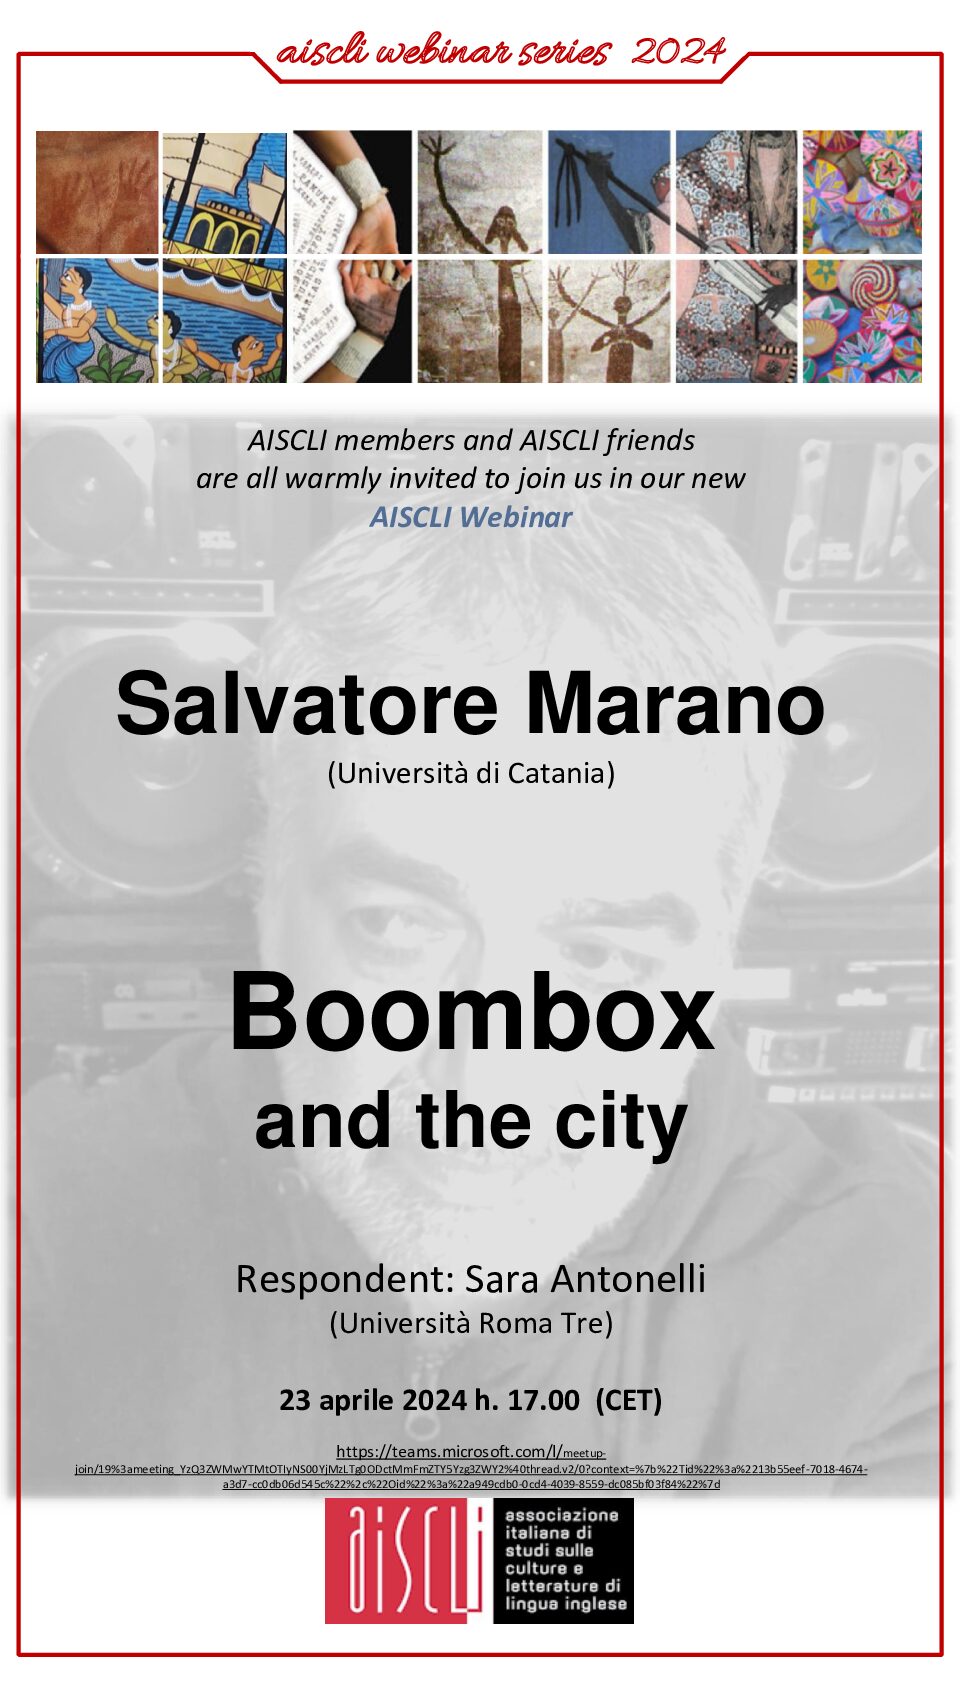 AISCLI WEBINAR SERIES 2024. SALVATORE MARANO: Boombox and the City. Respondent: Sara Antonelli